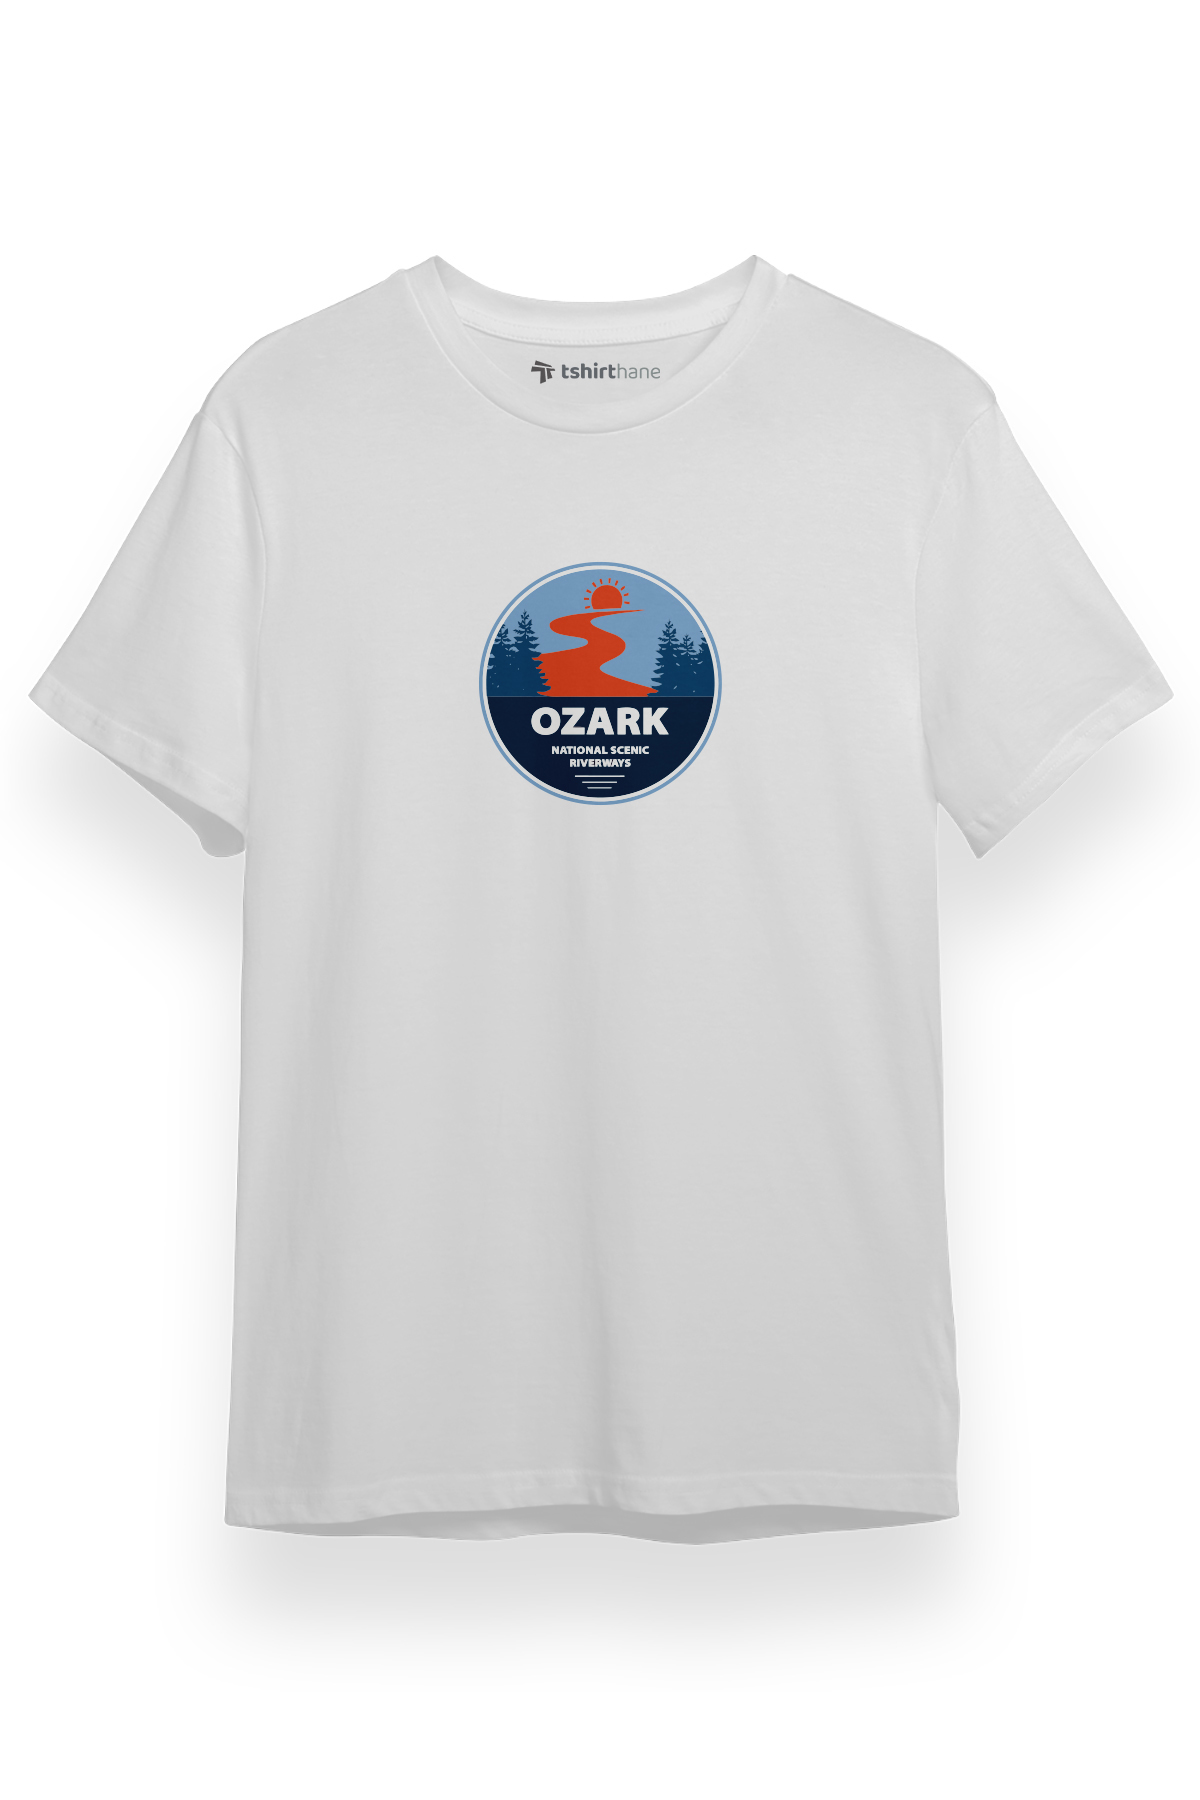 Ozark National Scenic Riverways Beyaz Kısa kol Erkek Tshirt